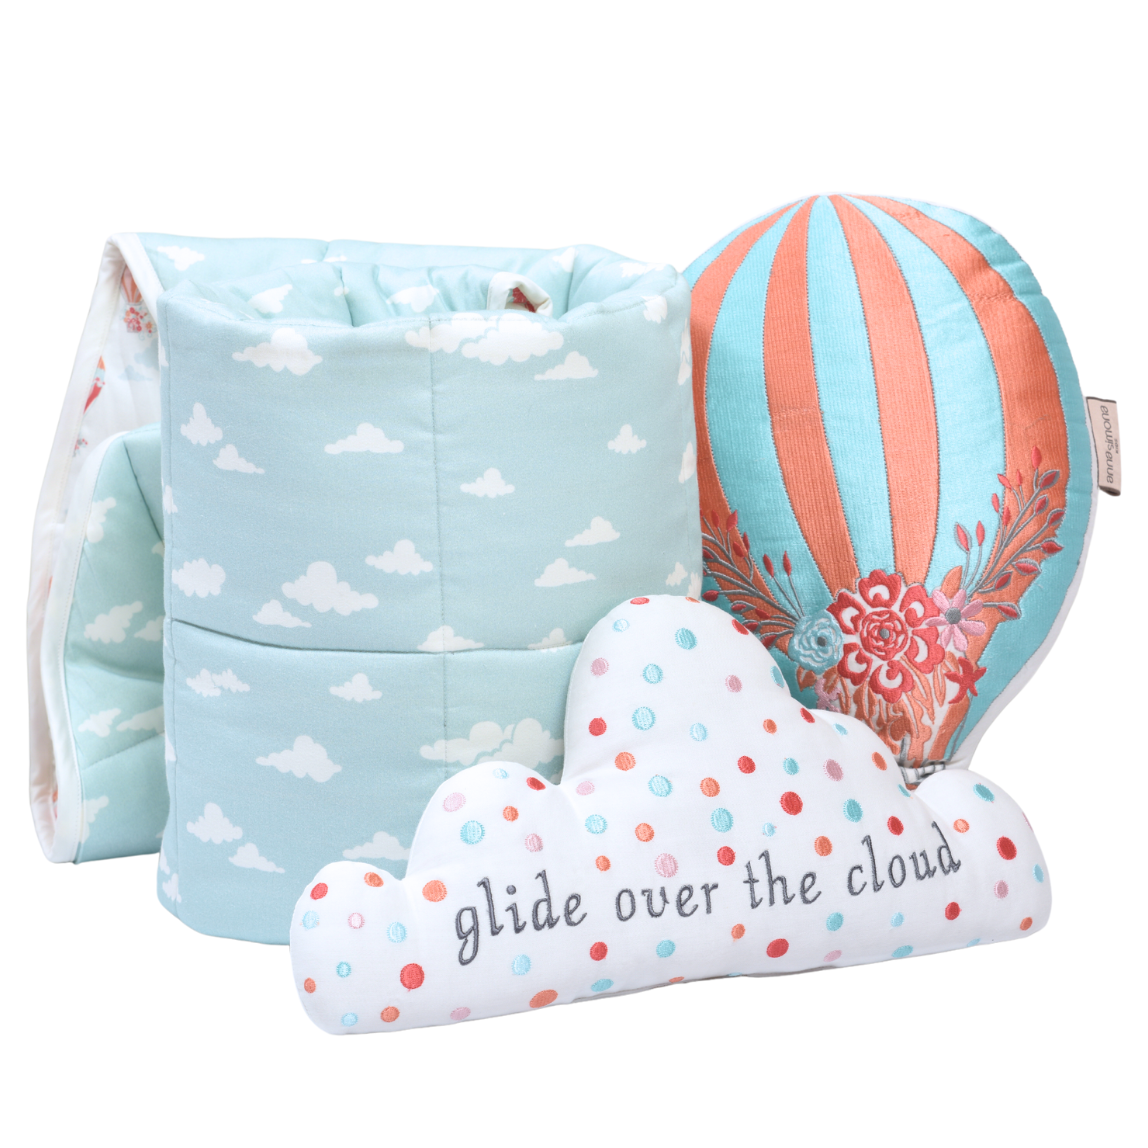 Parachute Play Time Gift Set (Play Mat + Play Cushions)